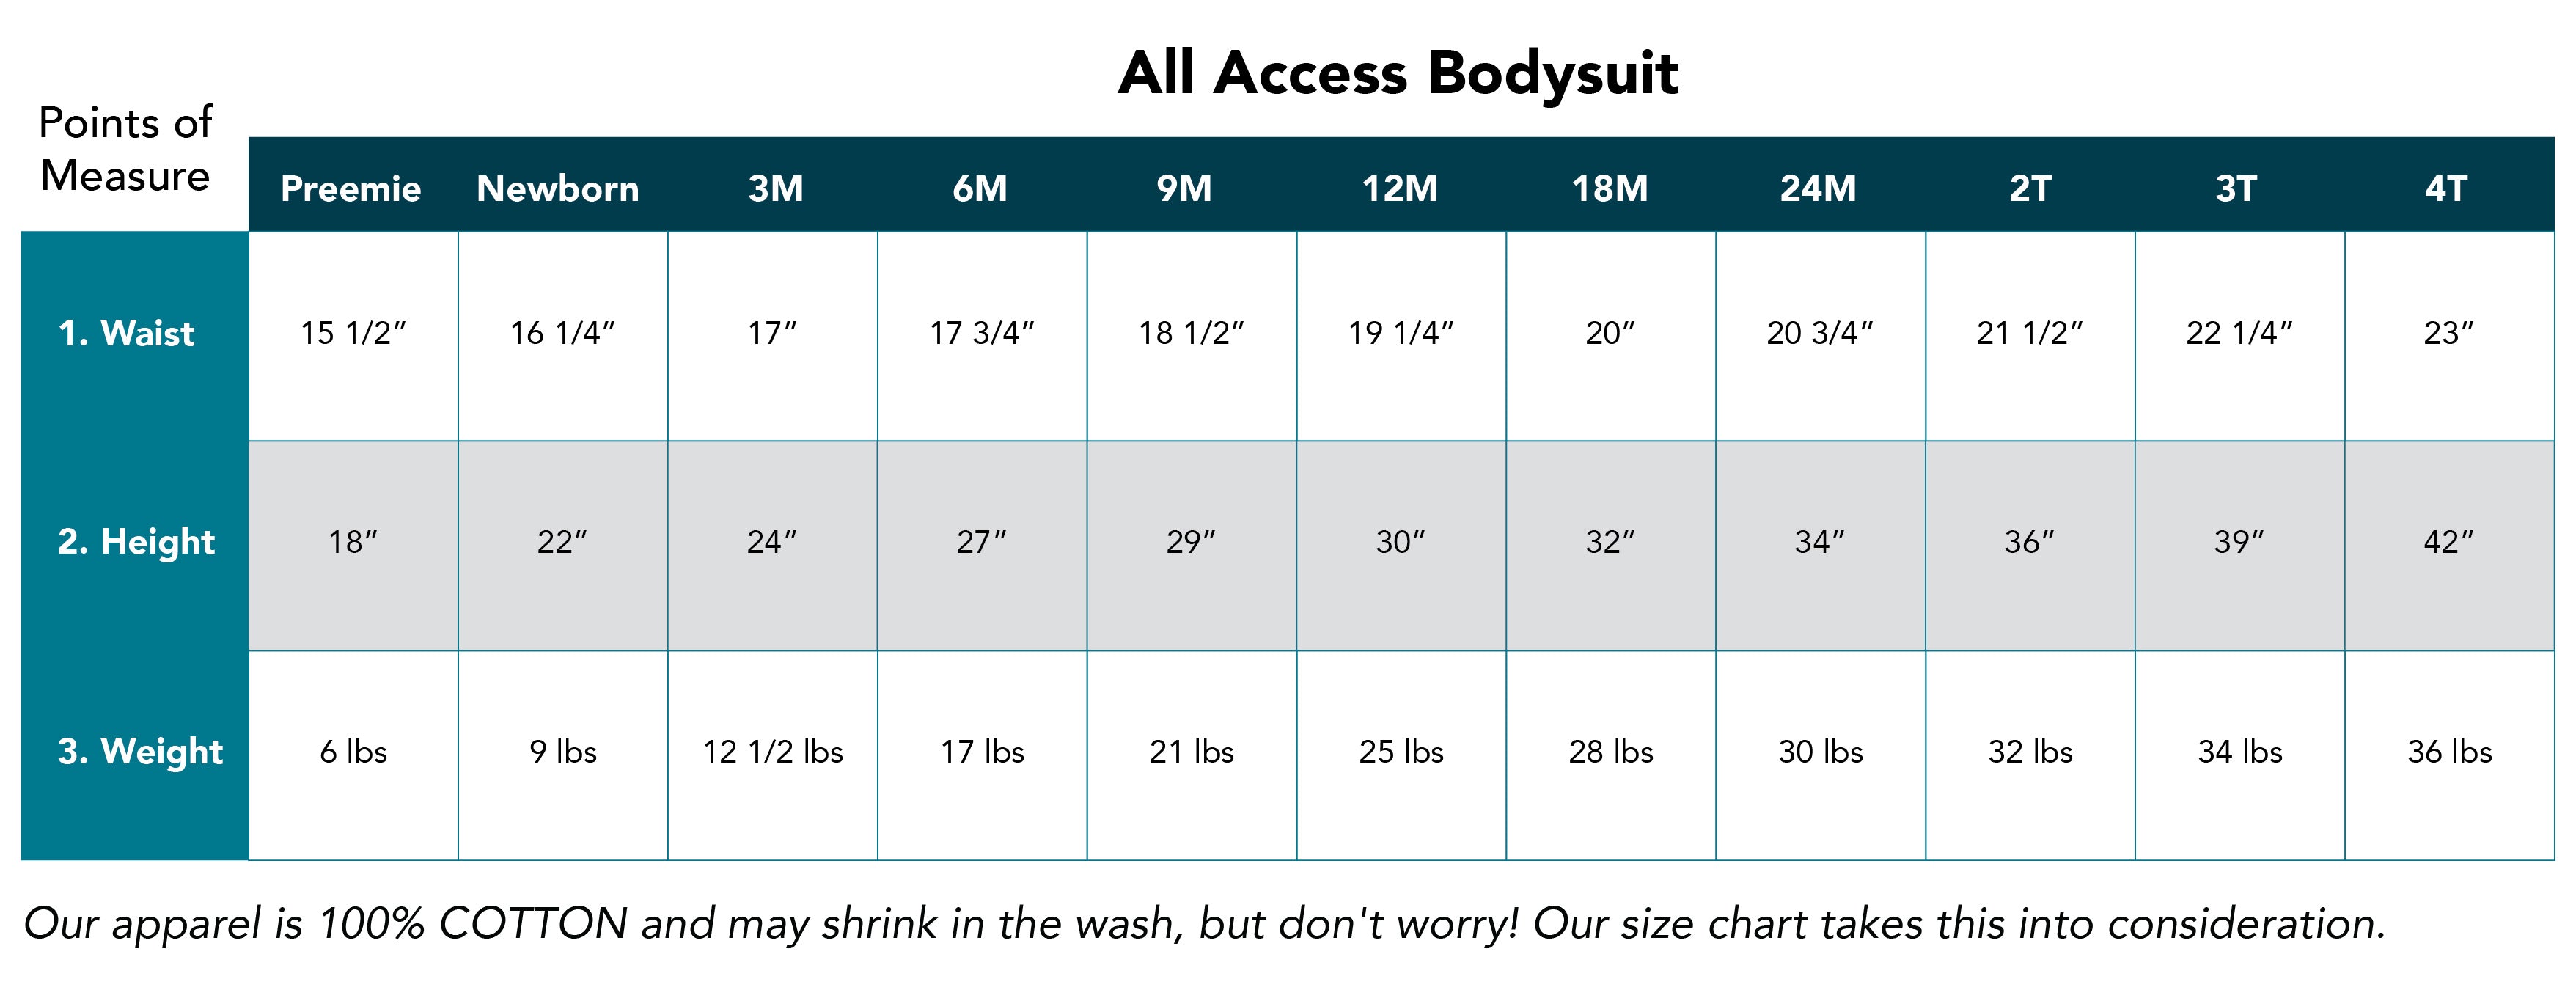 White All-Access Bodysuit | G-Tube, Catheter, NICU/PICU, Port-friendly adaptive clothing